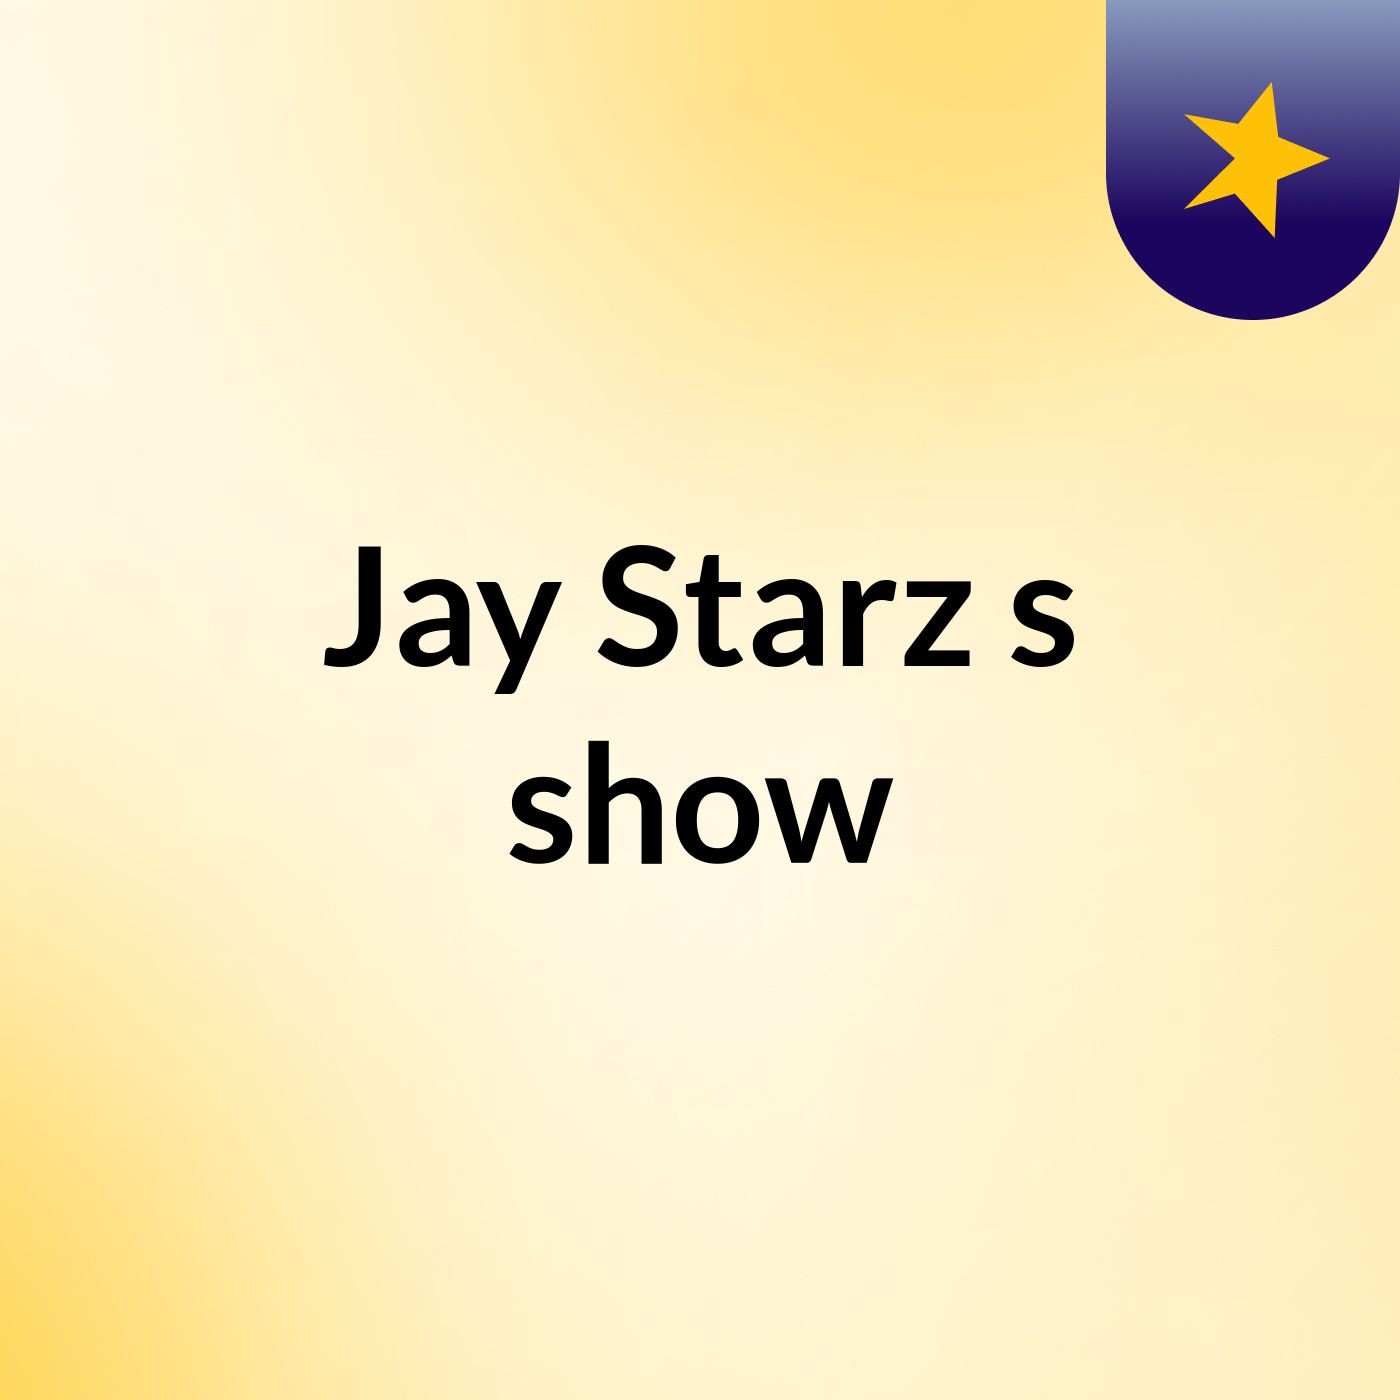 Jay Starz's show